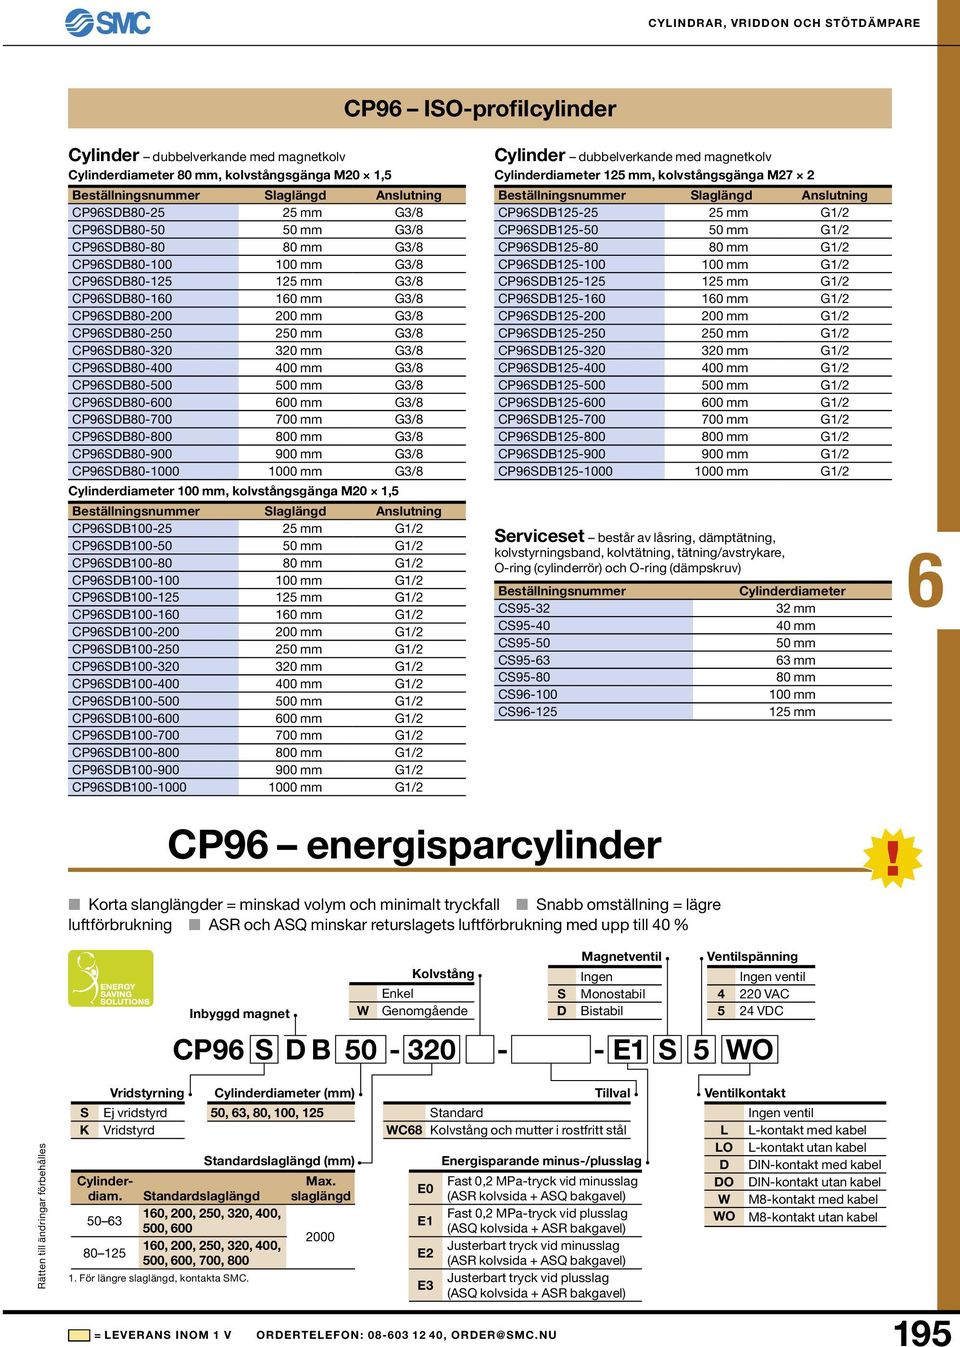 CP9SDB80-700 700 mm G3/8 CP9SDB80-800 800 mm G3/8 CP9SDB80-900 900 mm G3/8 CP9SDB80-1000 1000 mm G3/8 100 mm, kolvstångsgänga M20 1,5 Anslutning CP9SDB100-25 25 mm G1/2 CP9SDB100-50 50 mm G1/2